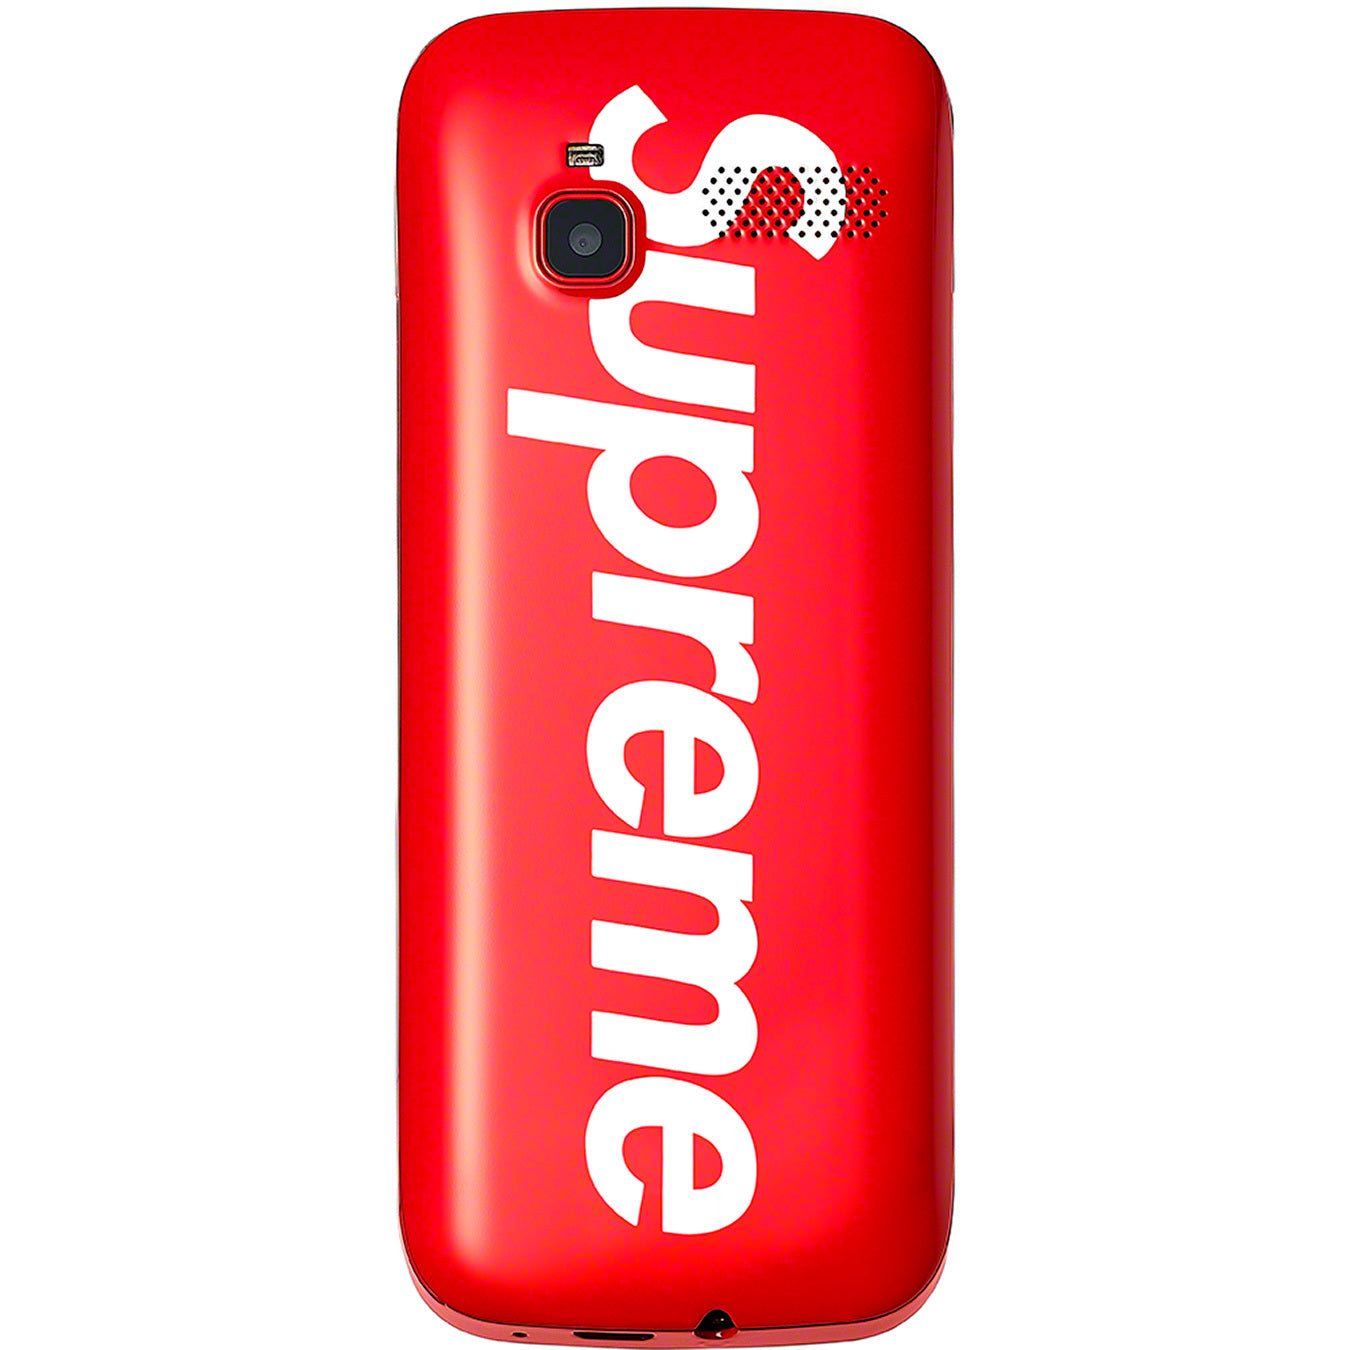 Supreme Blu Burner Phone - Red from Supreme